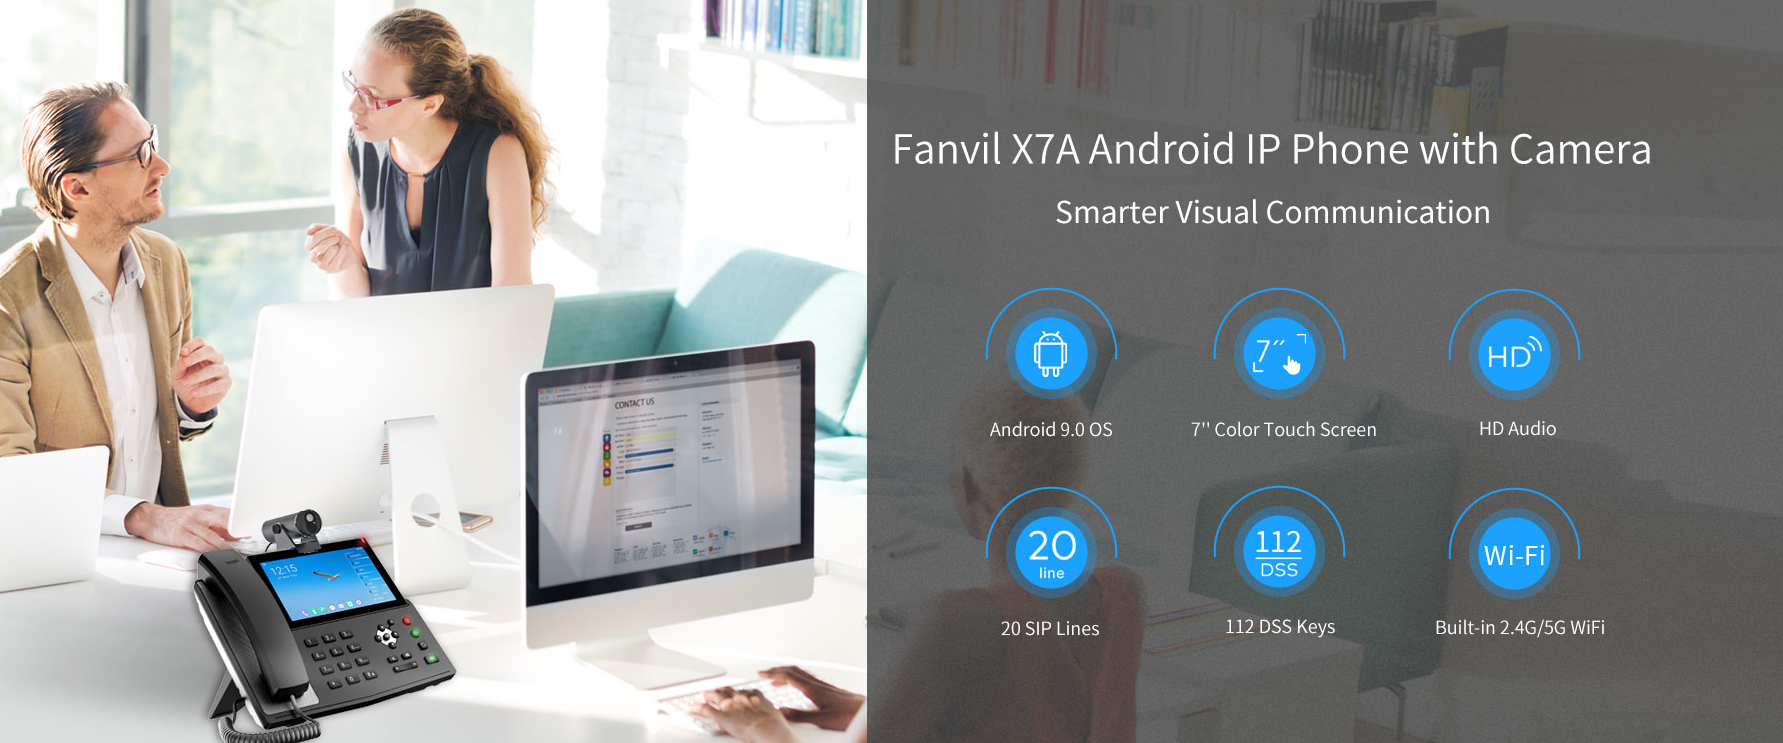 Fanvil X7A Android IP Phone with Camera - Hong Kong Distributor - 香港代理